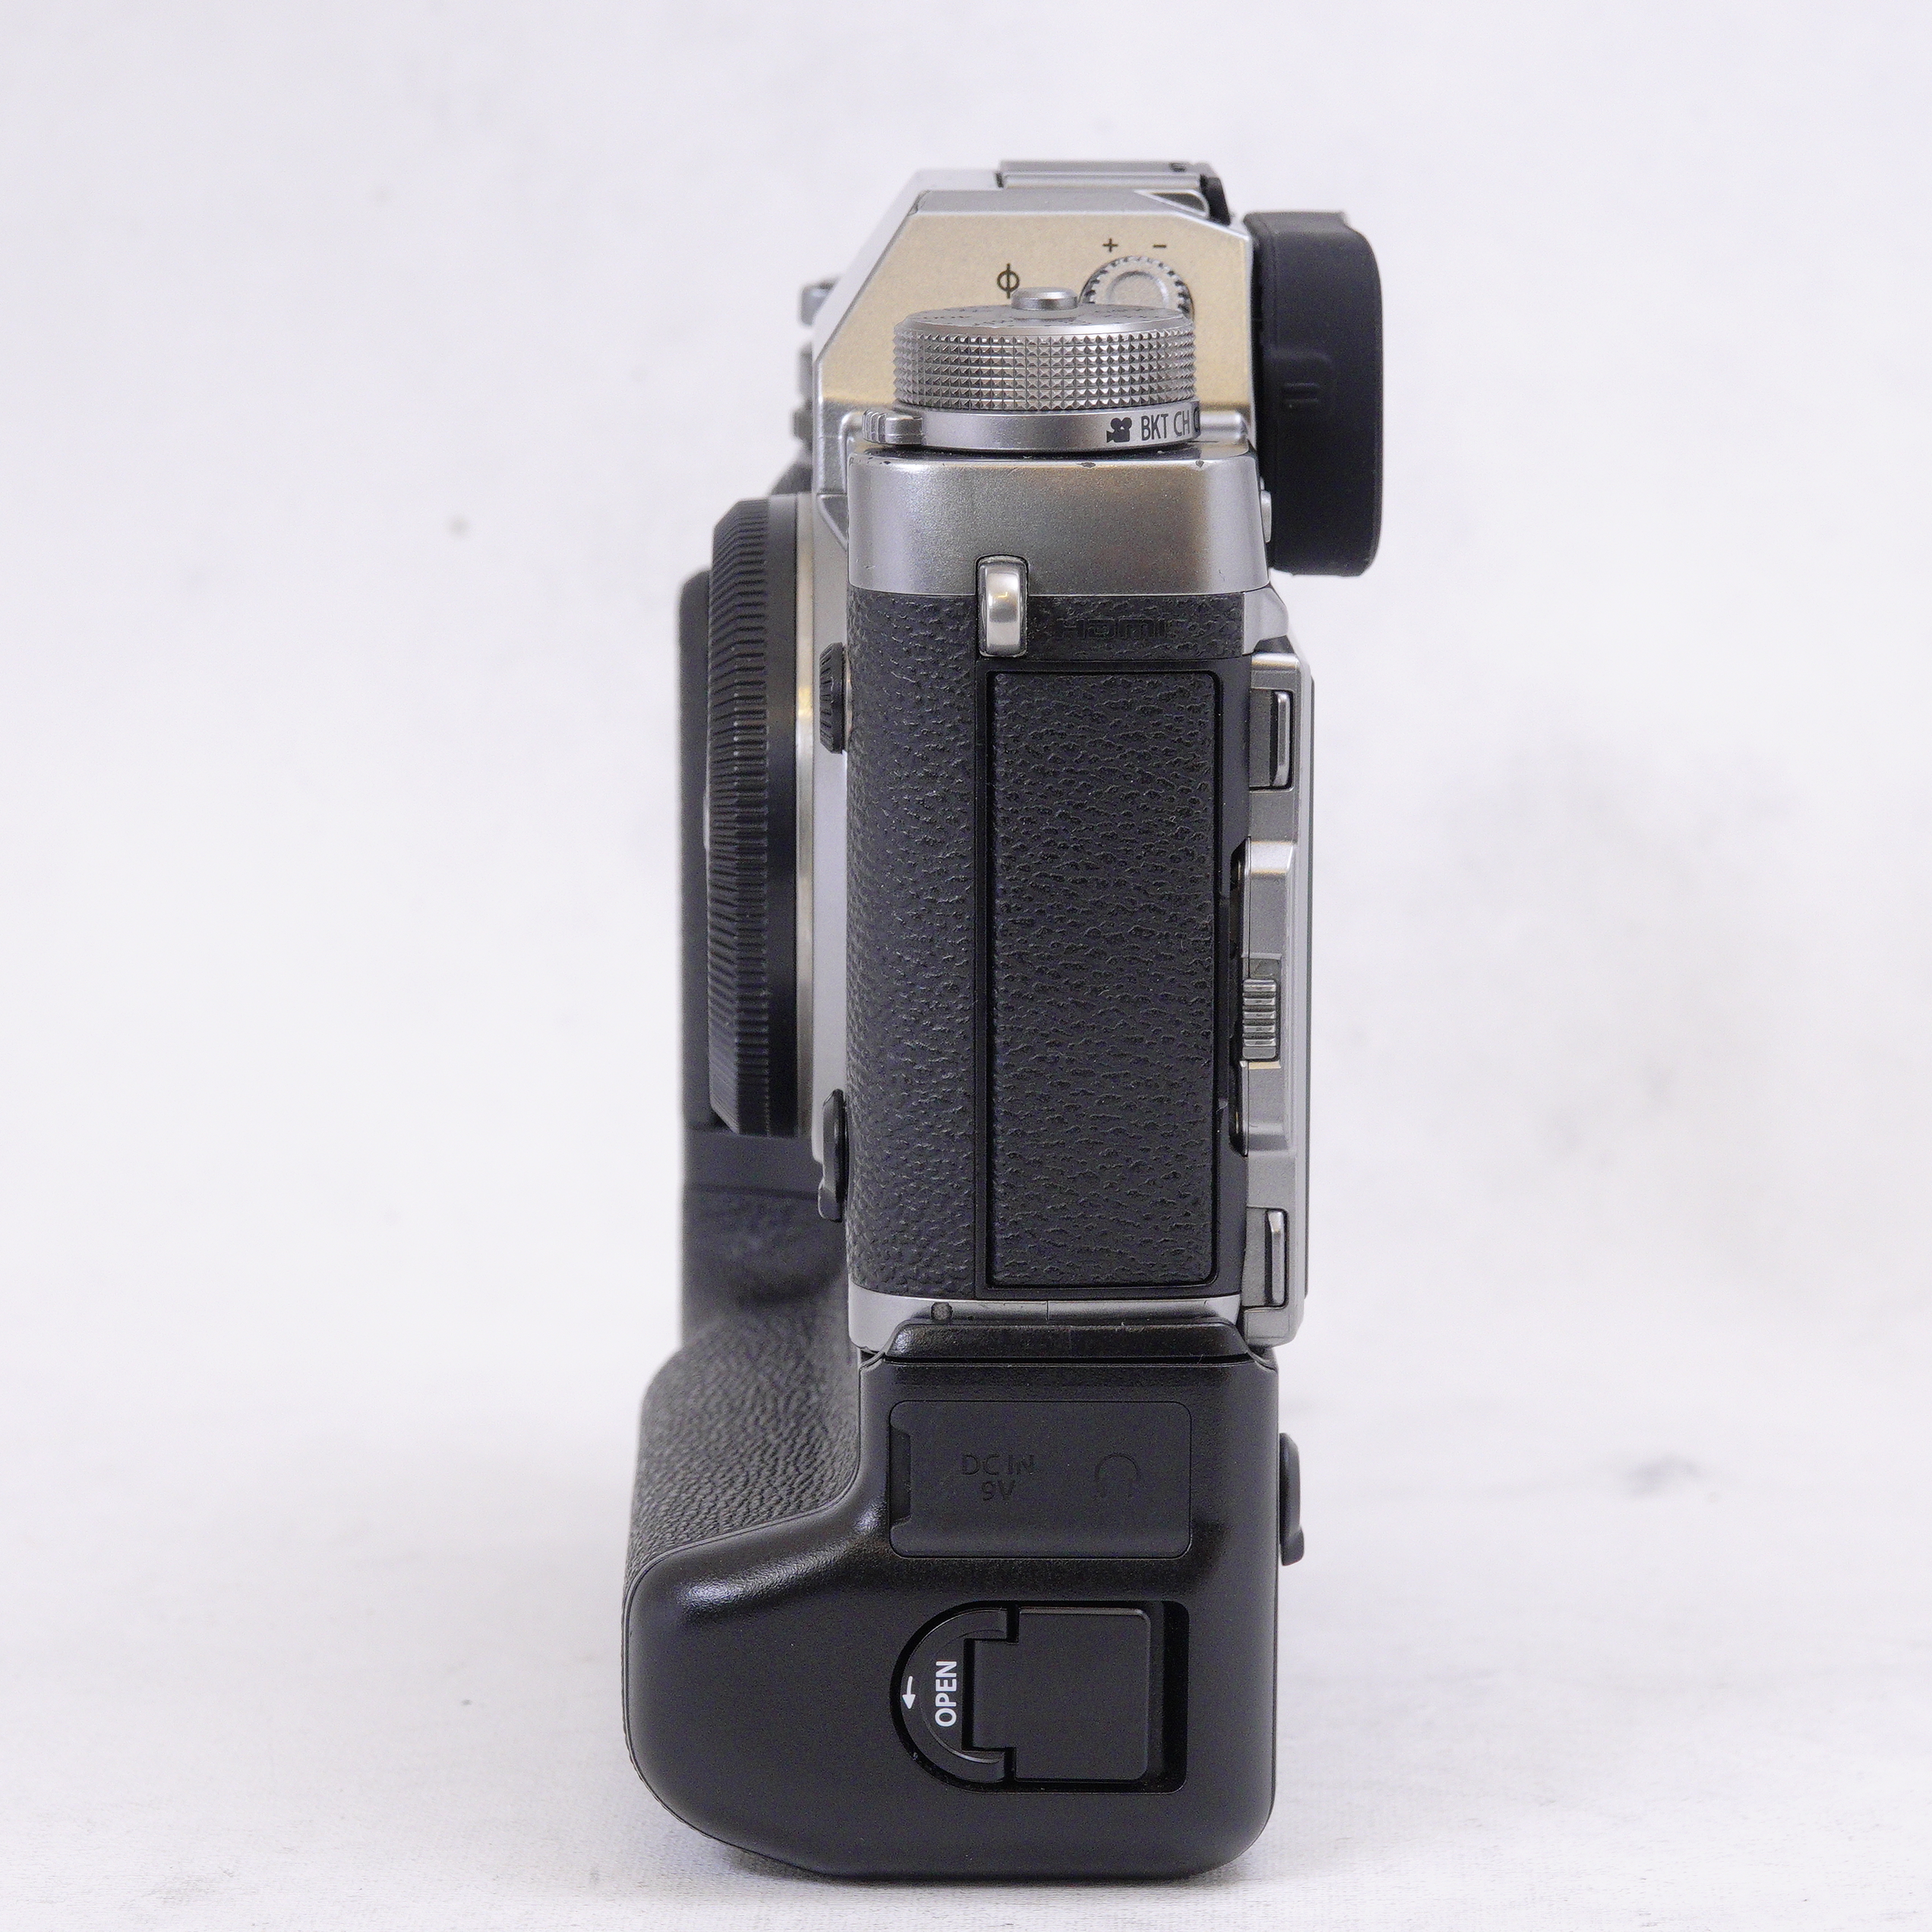 FUJIFILM X-T2 con Battery Grip Kit (Graphite Silver Edition) - Usado